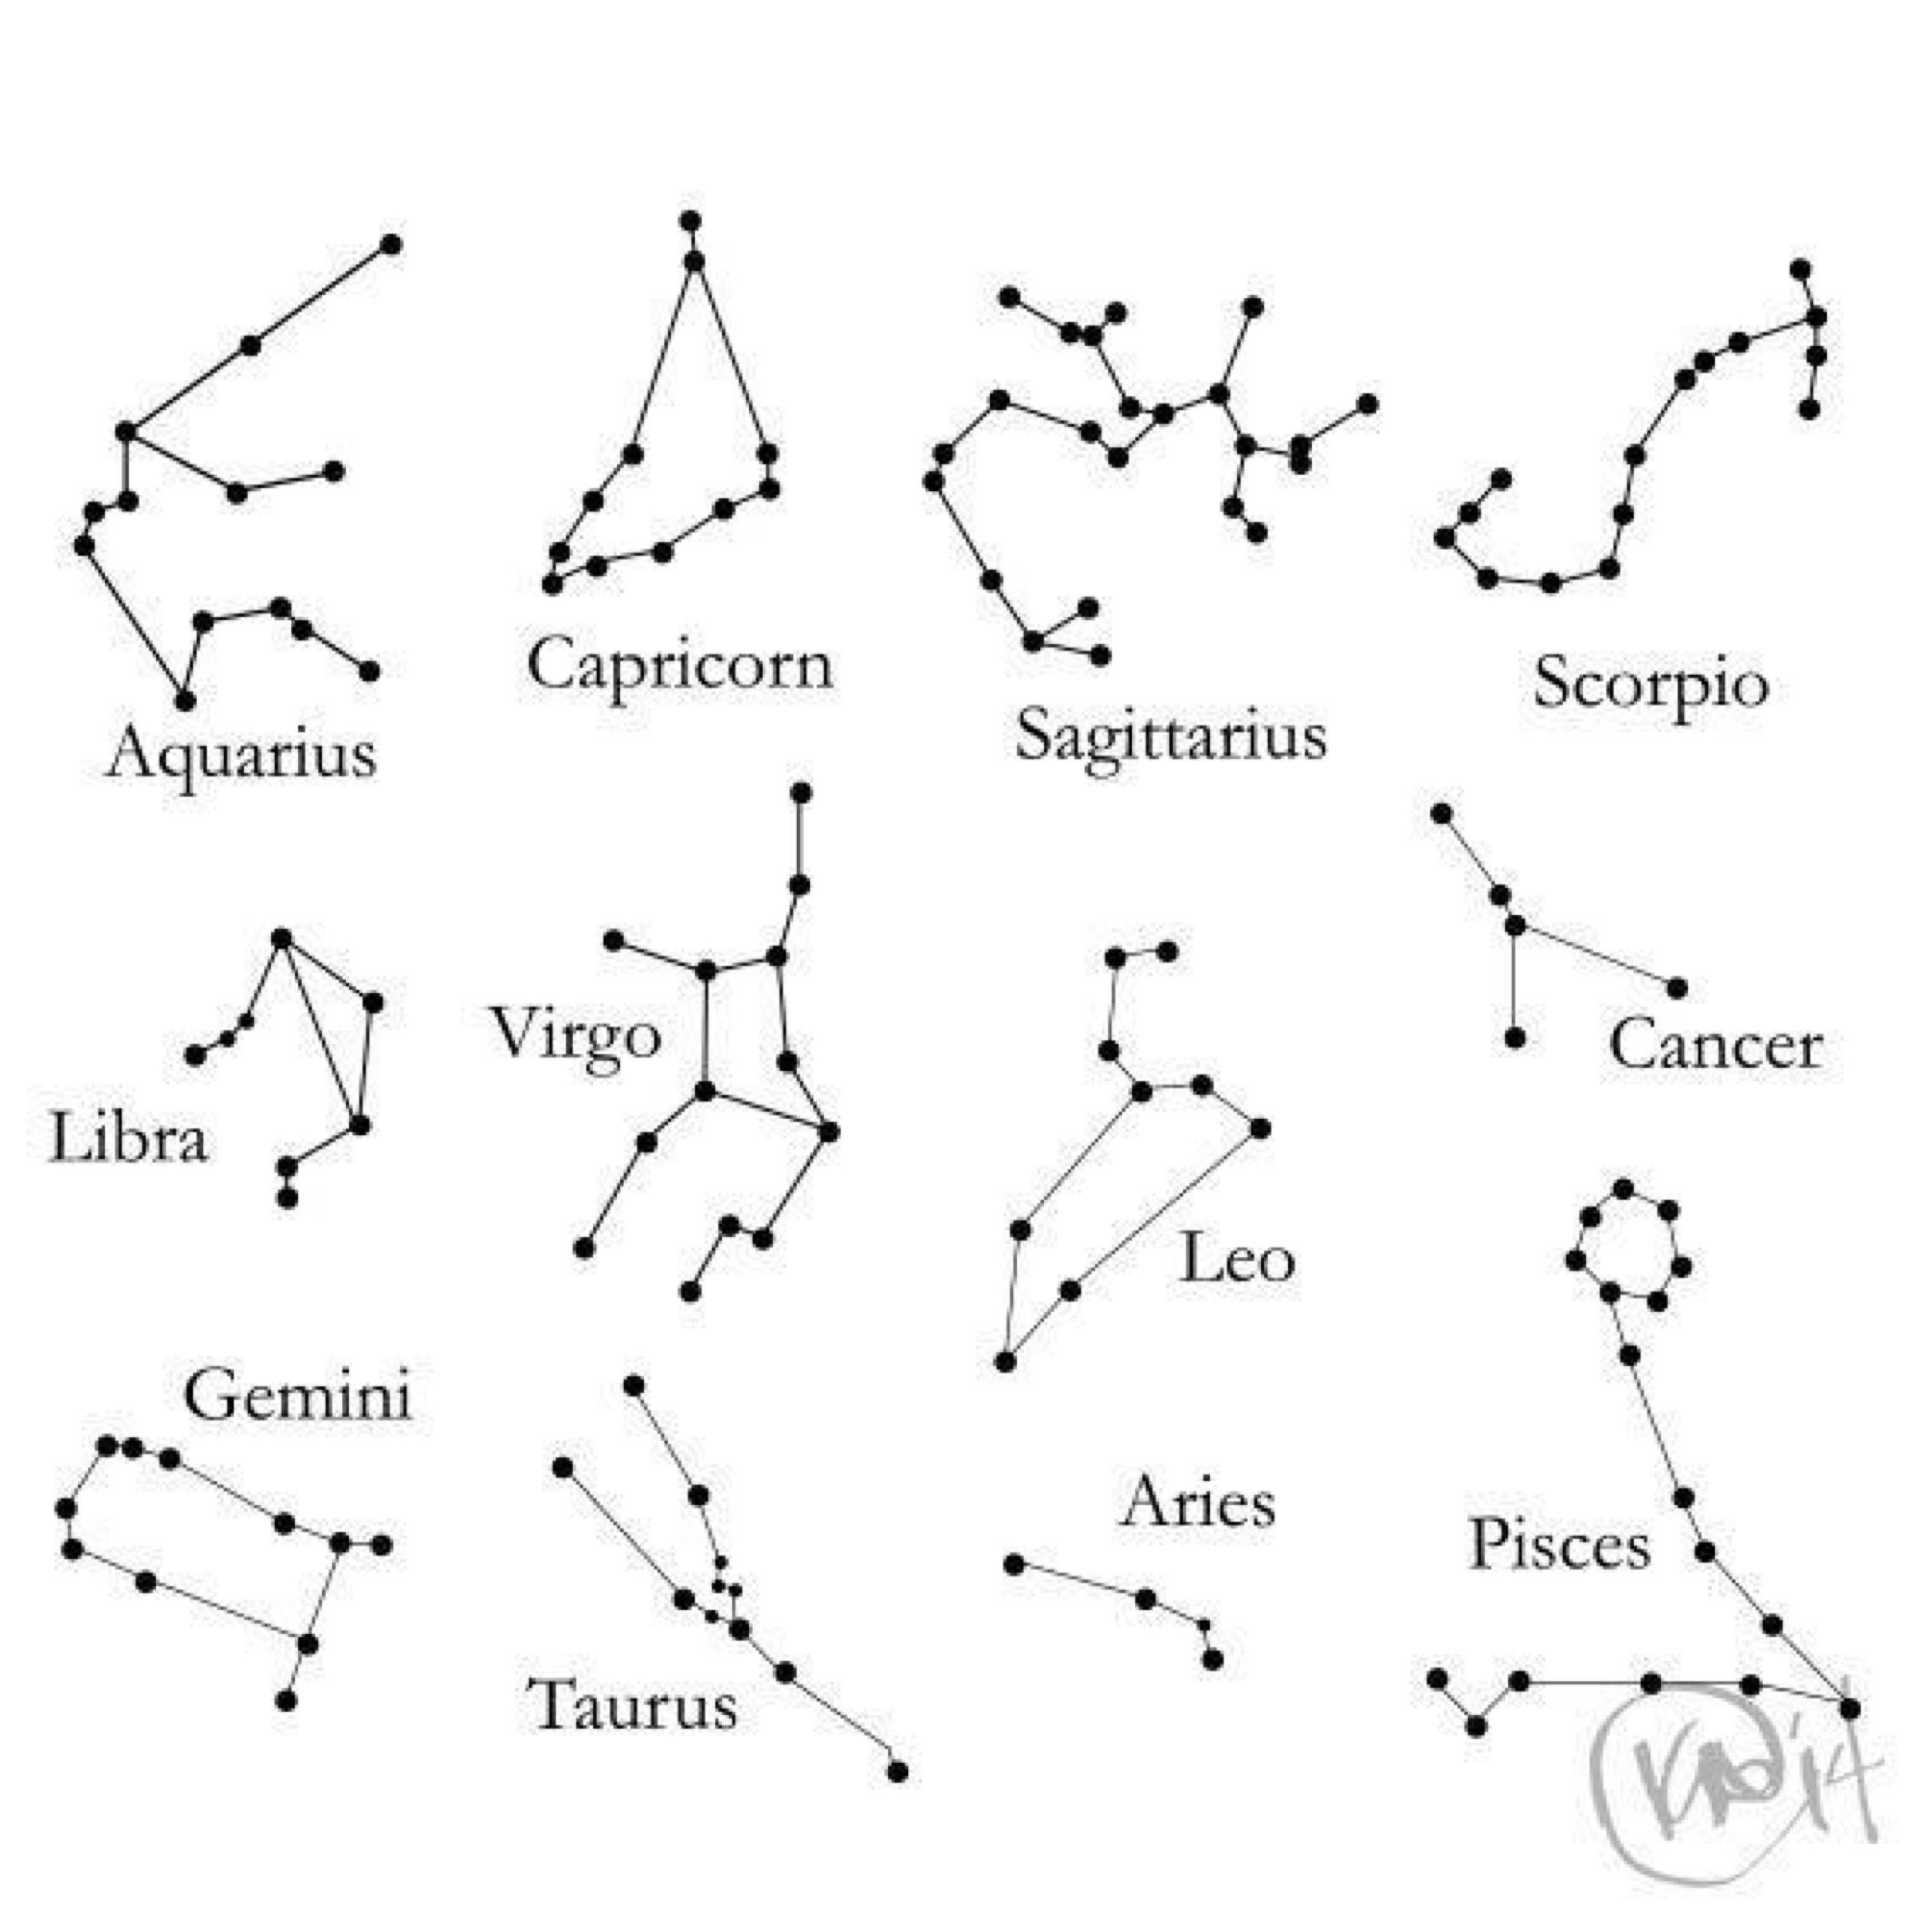 Спортивные созвездия. Ариес знак зодиака схема созвездия. Созвездие Стрелец схема по точкам. Созвездие Овен схема по точкам. Дева Созвездие схема.